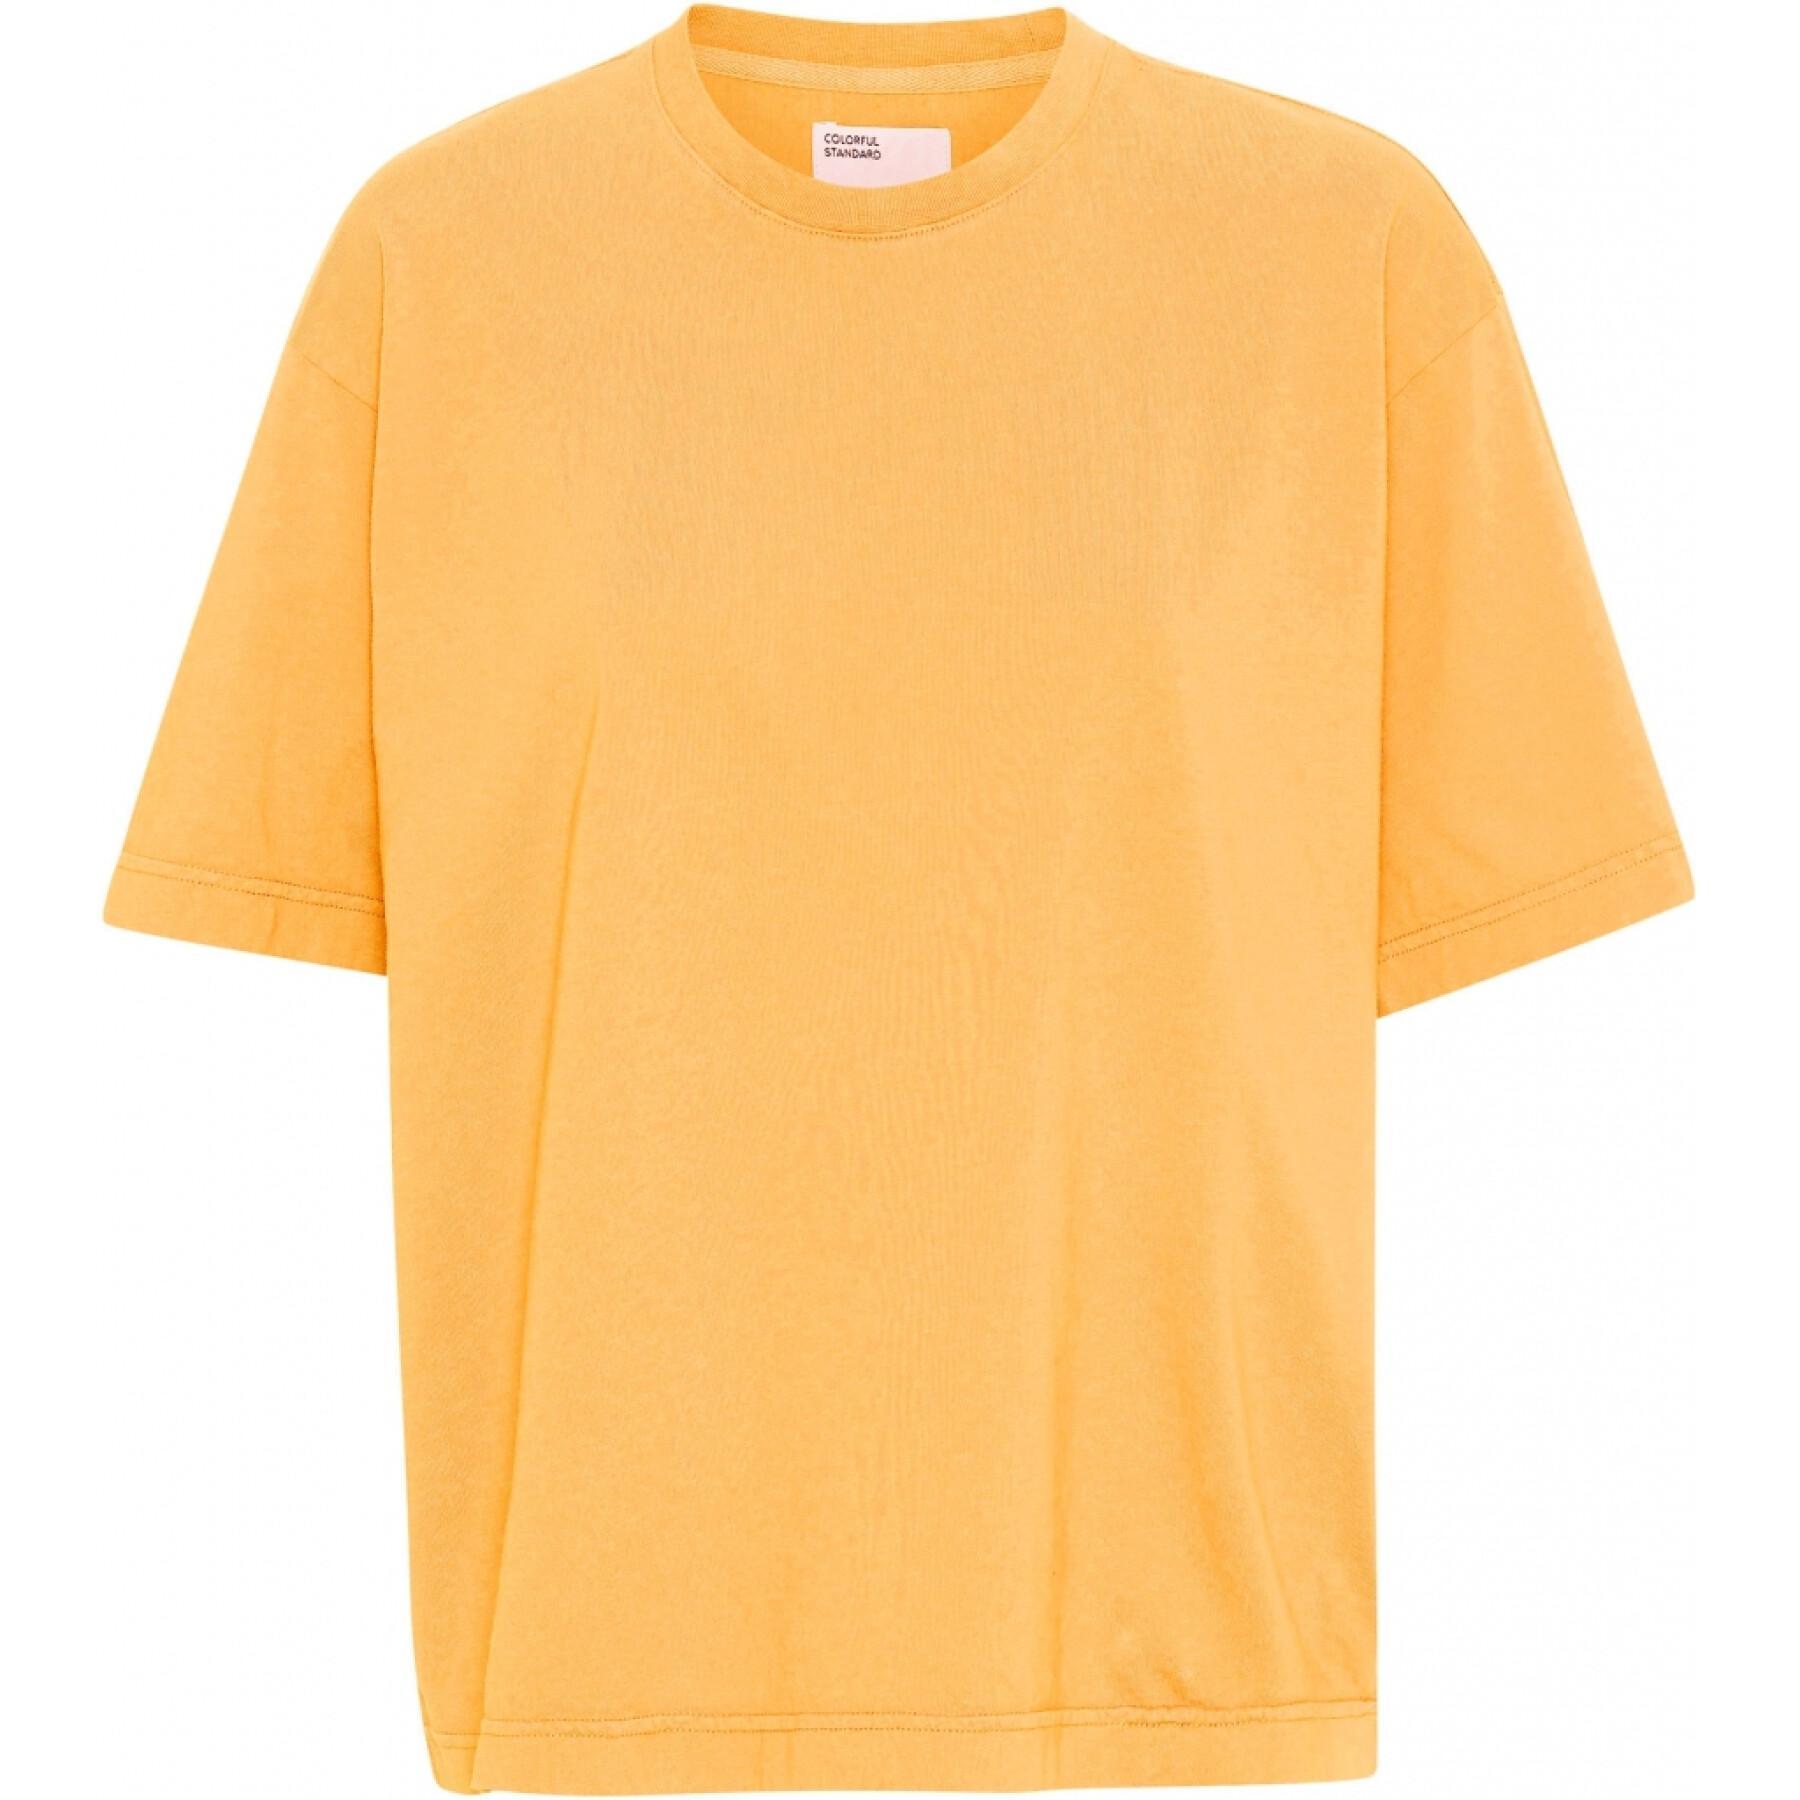 Women's T-shirt Colorful Standard Organic oversized burned yellow